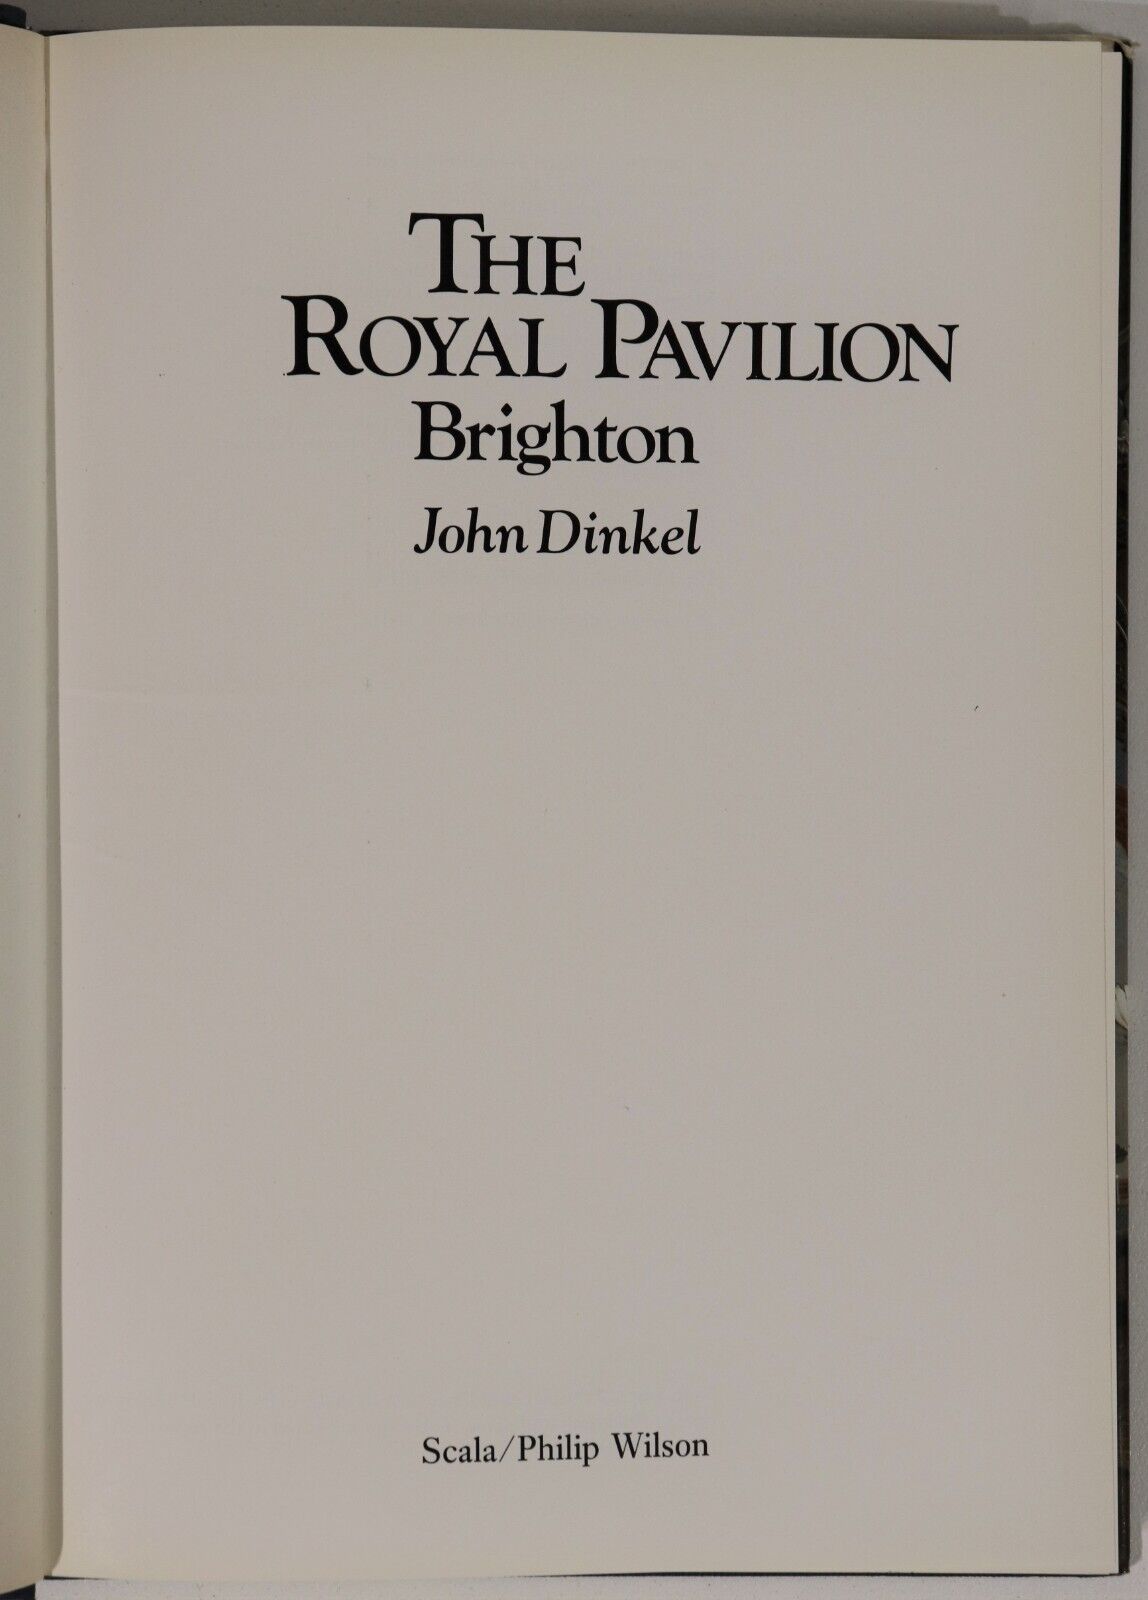 The Royal Pavillion: Brighton - 1983 - British Architecture History Book - 0